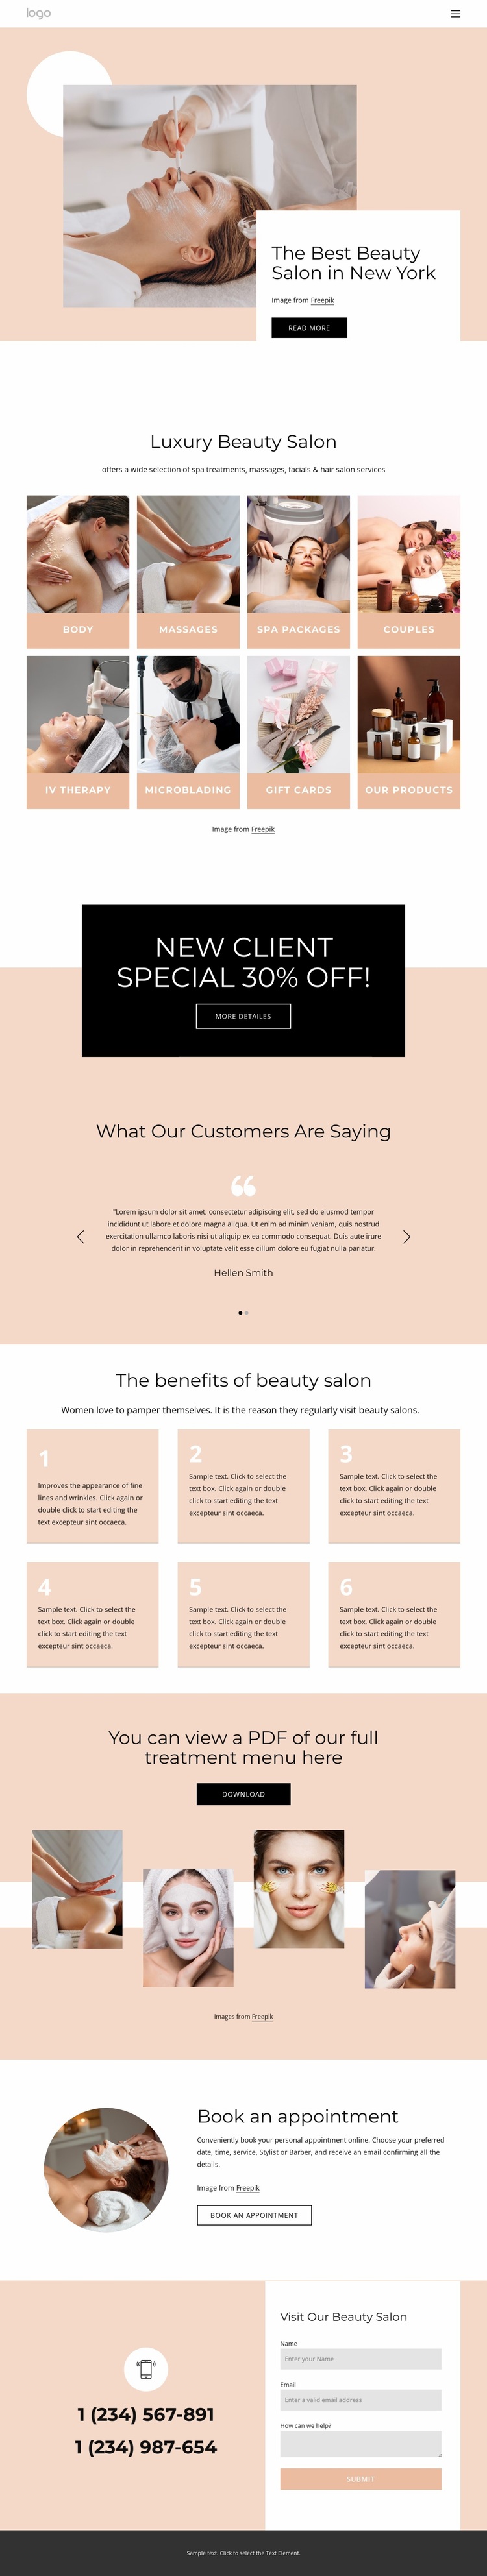 The best beauty salon in NYC Website Design